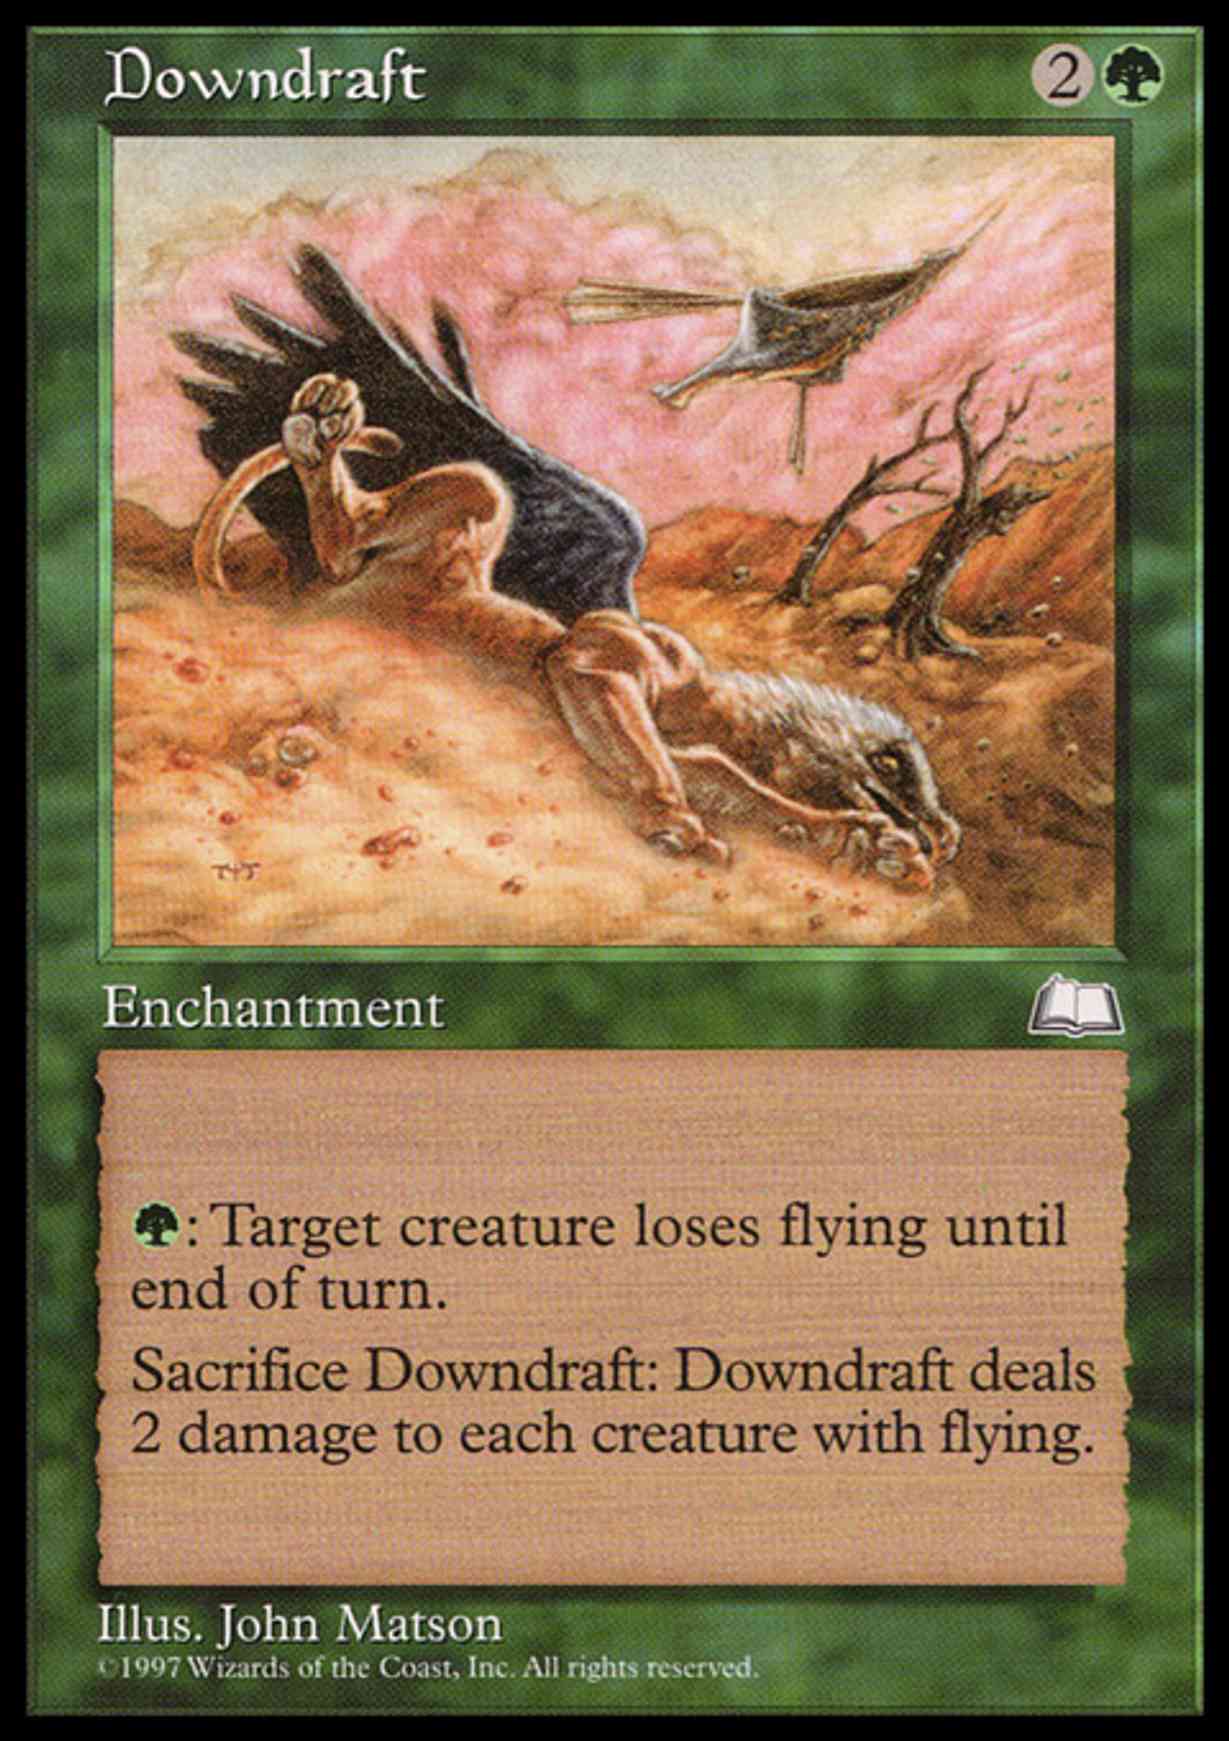 Downdraft magic card front